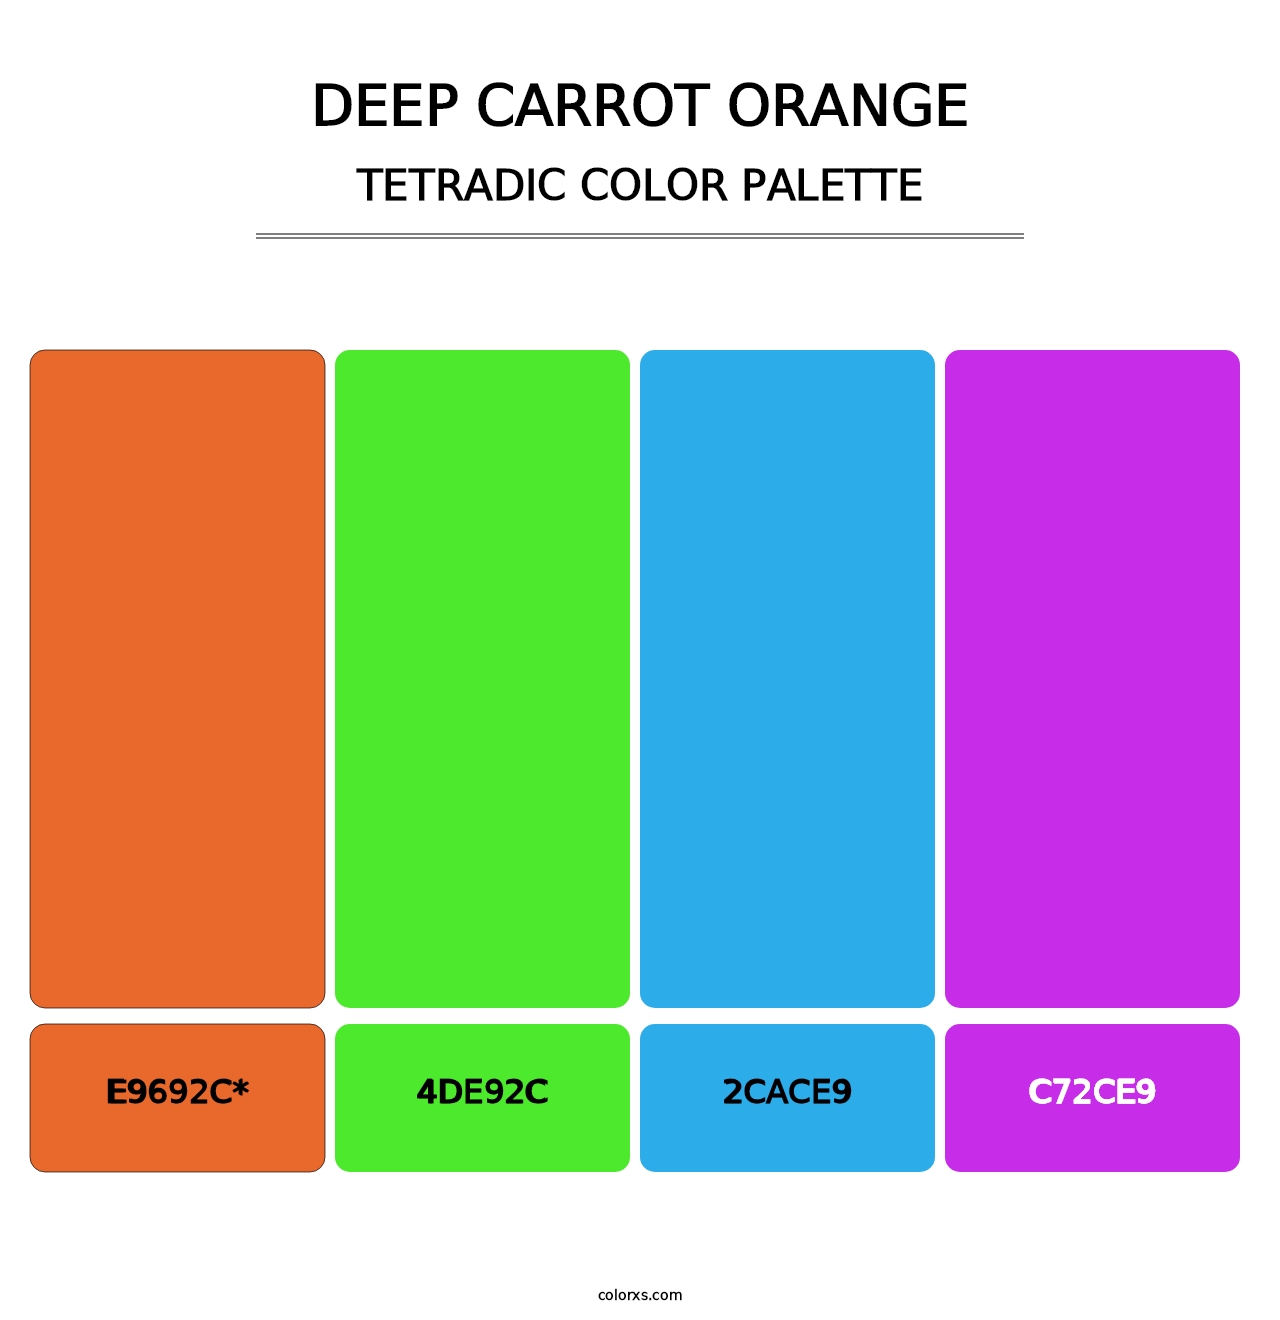 Deep Carrot Orange - Tetradic Color Palette